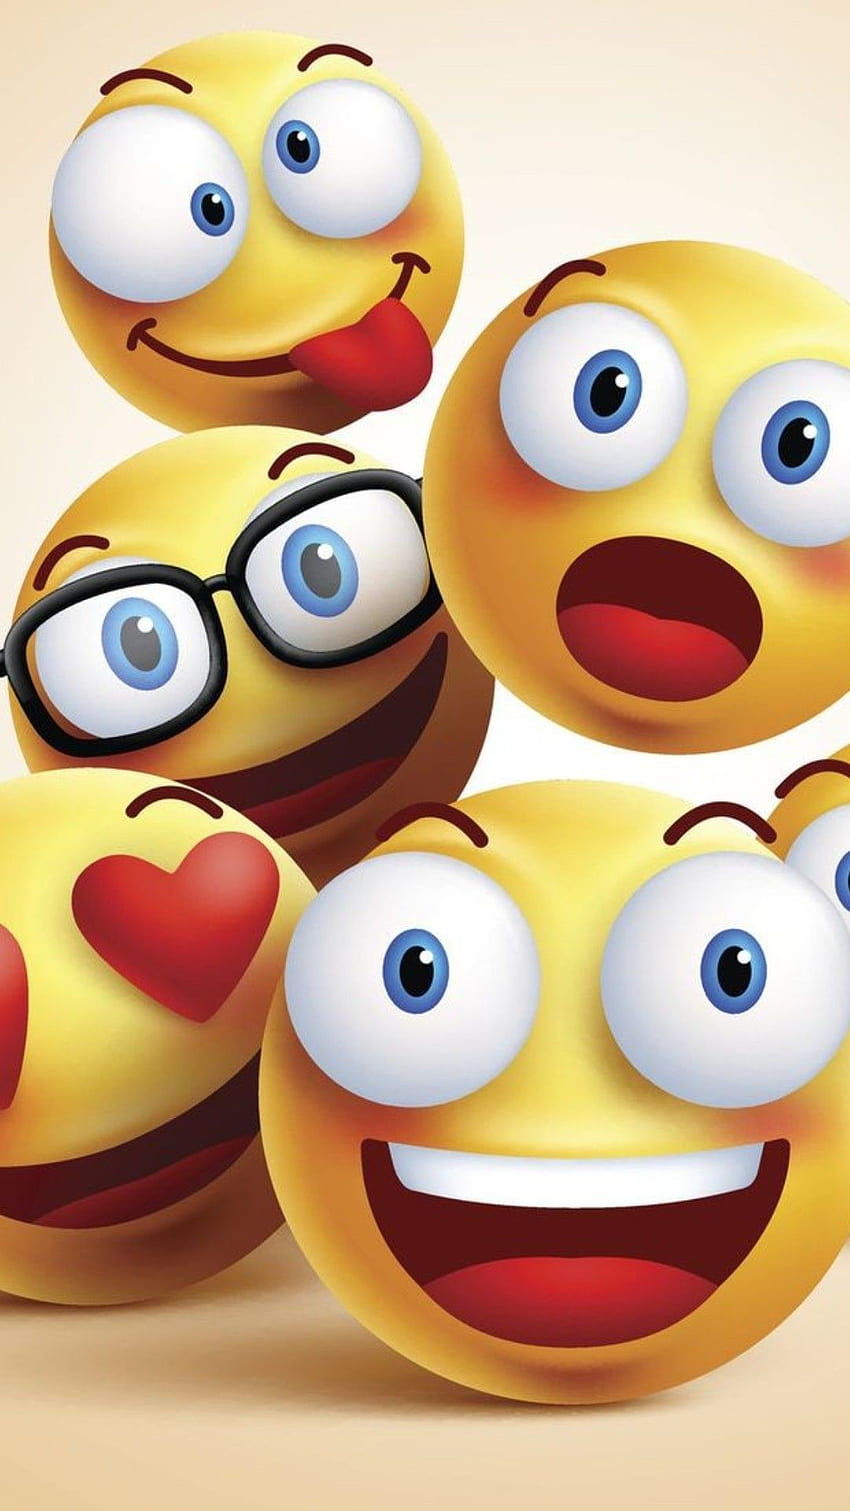 Smile emoji wallpaper Wallpapers Download  MobCup